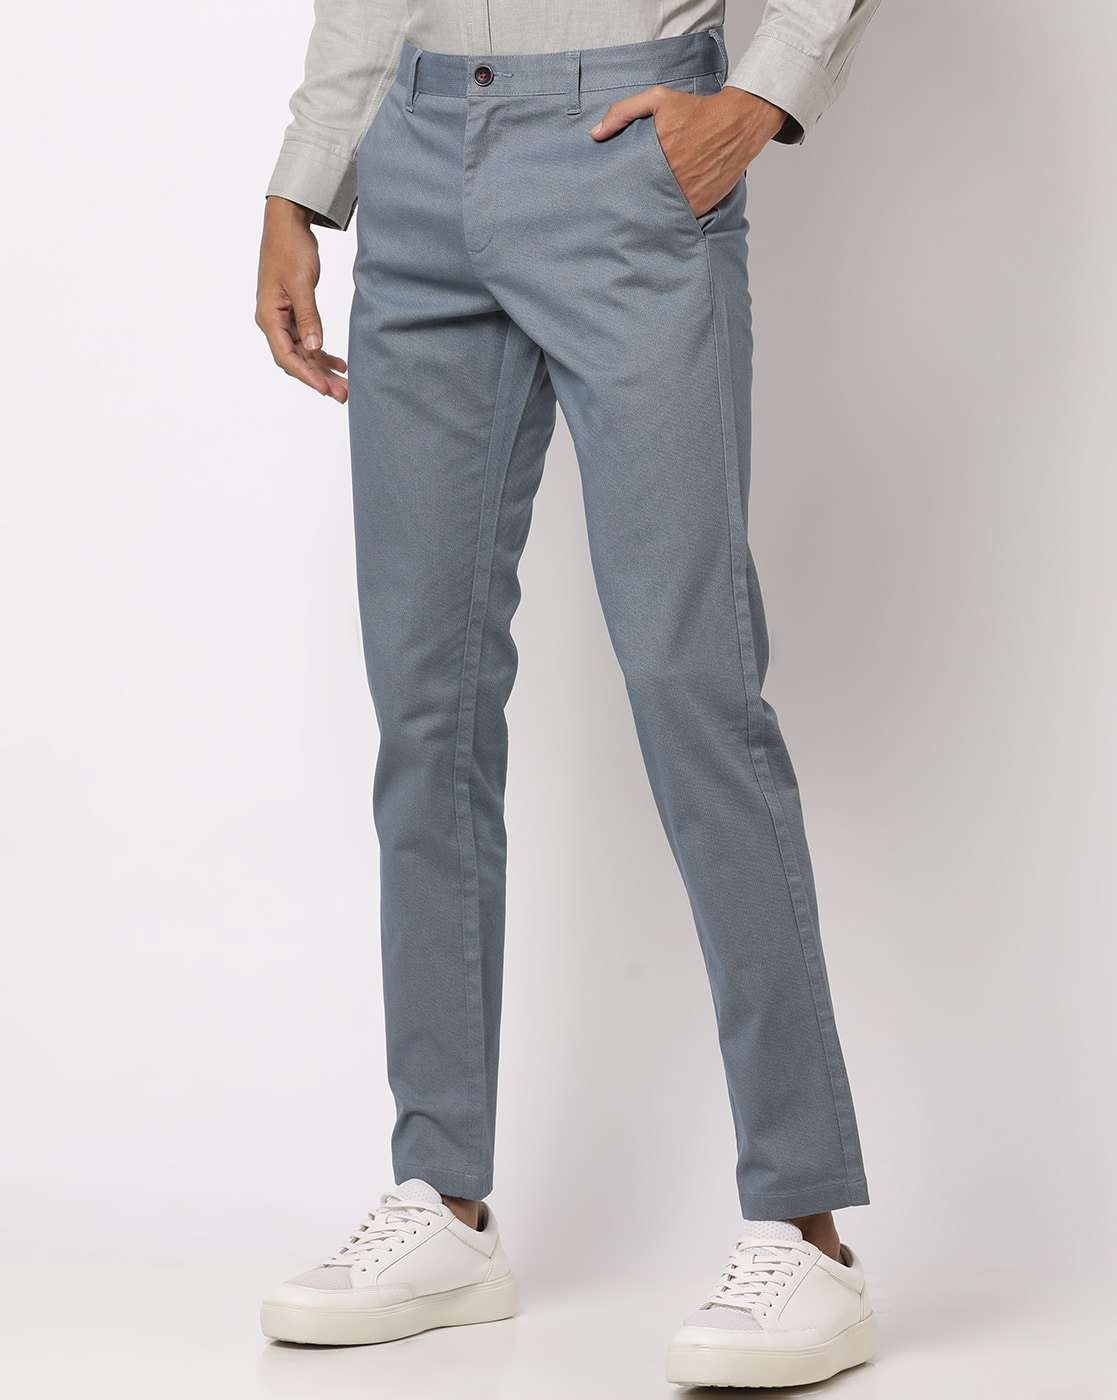 Dressing Light Blue Shirt Gray Pants Stock Photo 178311767 | Shutterstock